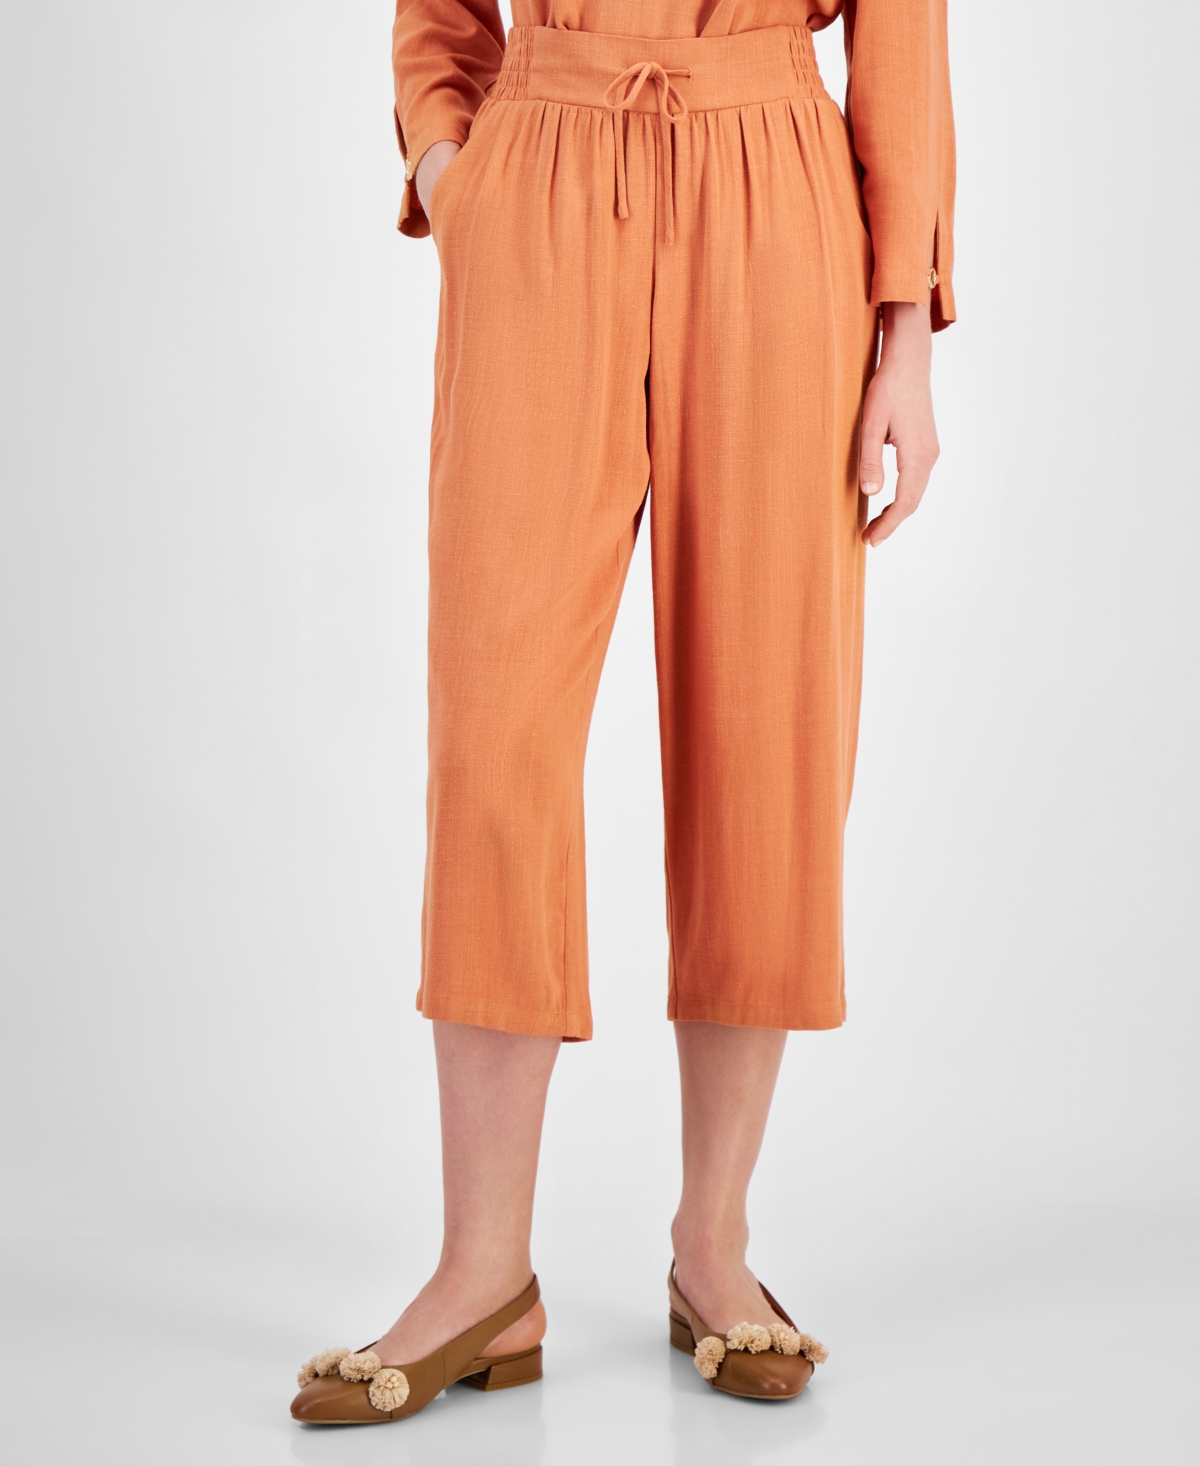 Women's Smocked-Waist Cropped Pants, Created for Macy's - Citrus Sachet